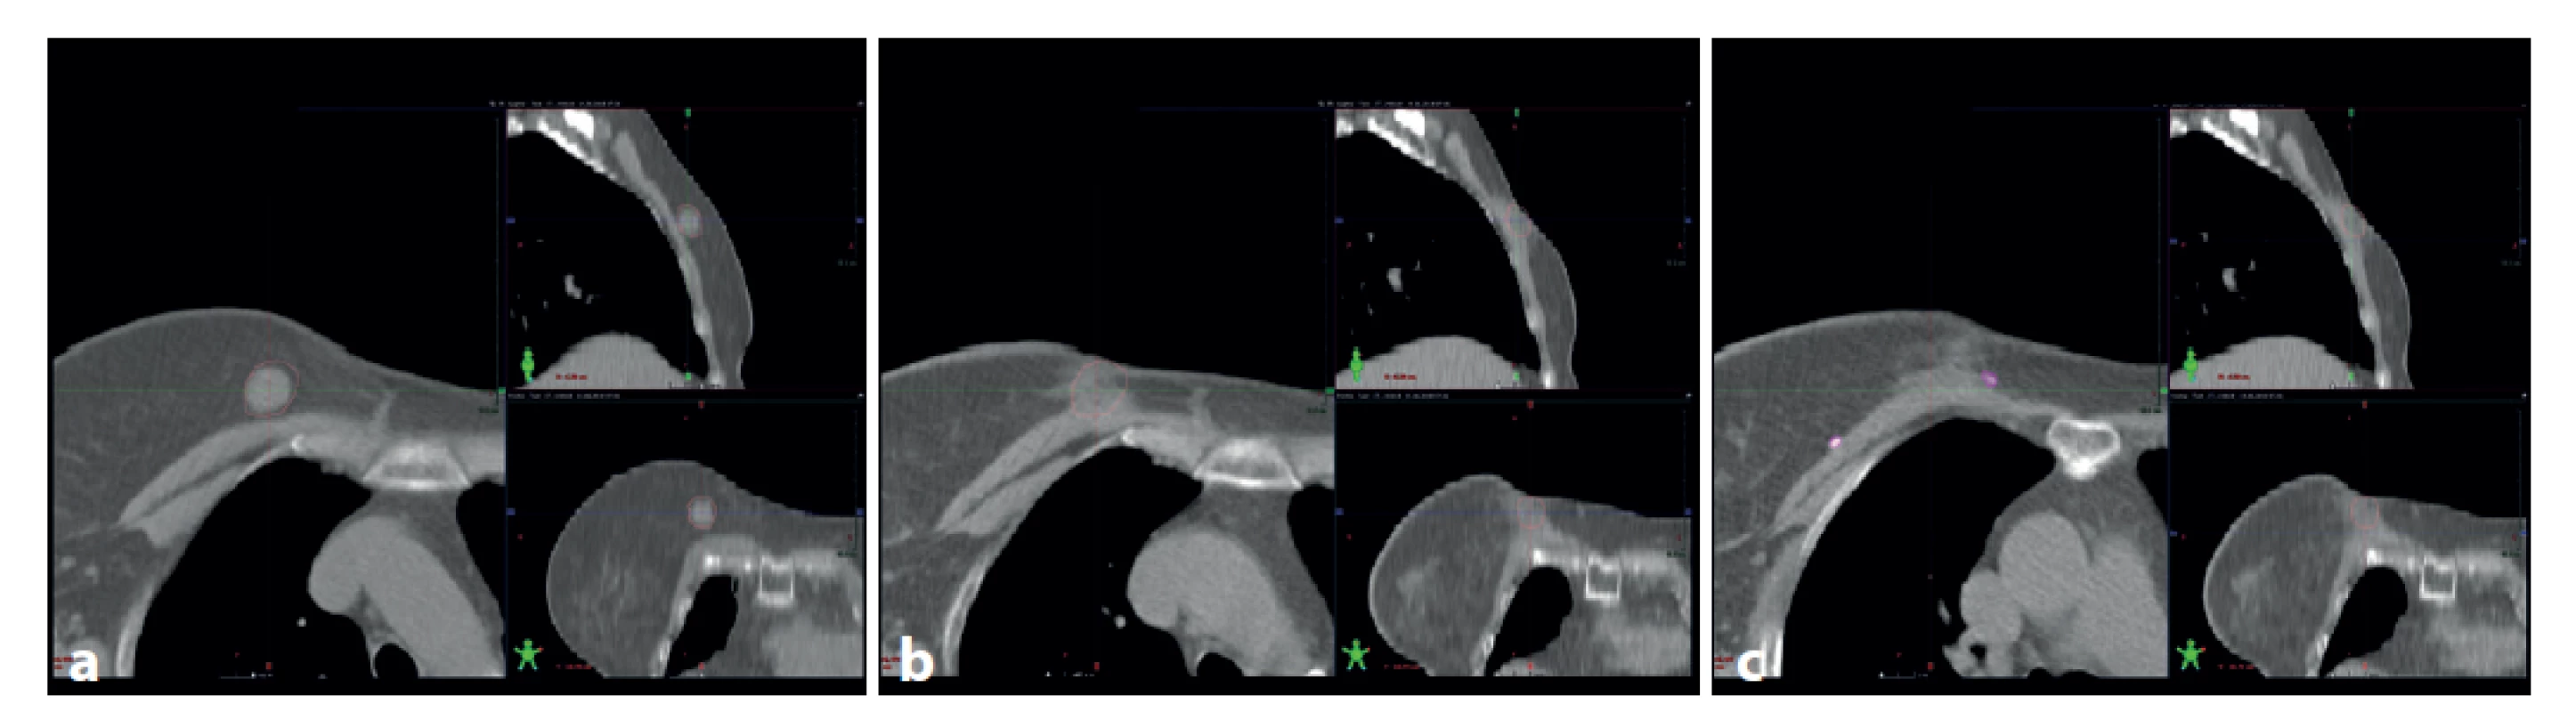 : a – předoperační CT s tumorem (konturován hnědě), b – pooperační CT ve stejné lokalizaci, c – pooperační CT v oblasti
s metalický klipy v lůžku tumoru (hnědě kontura původní lokalizace tumoru)<br>
Fig. 2: a – preoperative CT, tumor contoured brown; b – postoperative CT in the same location; c – postoperative CT with
metallic markers in the postlumpectomy cavity (original tumor site contoured brown)